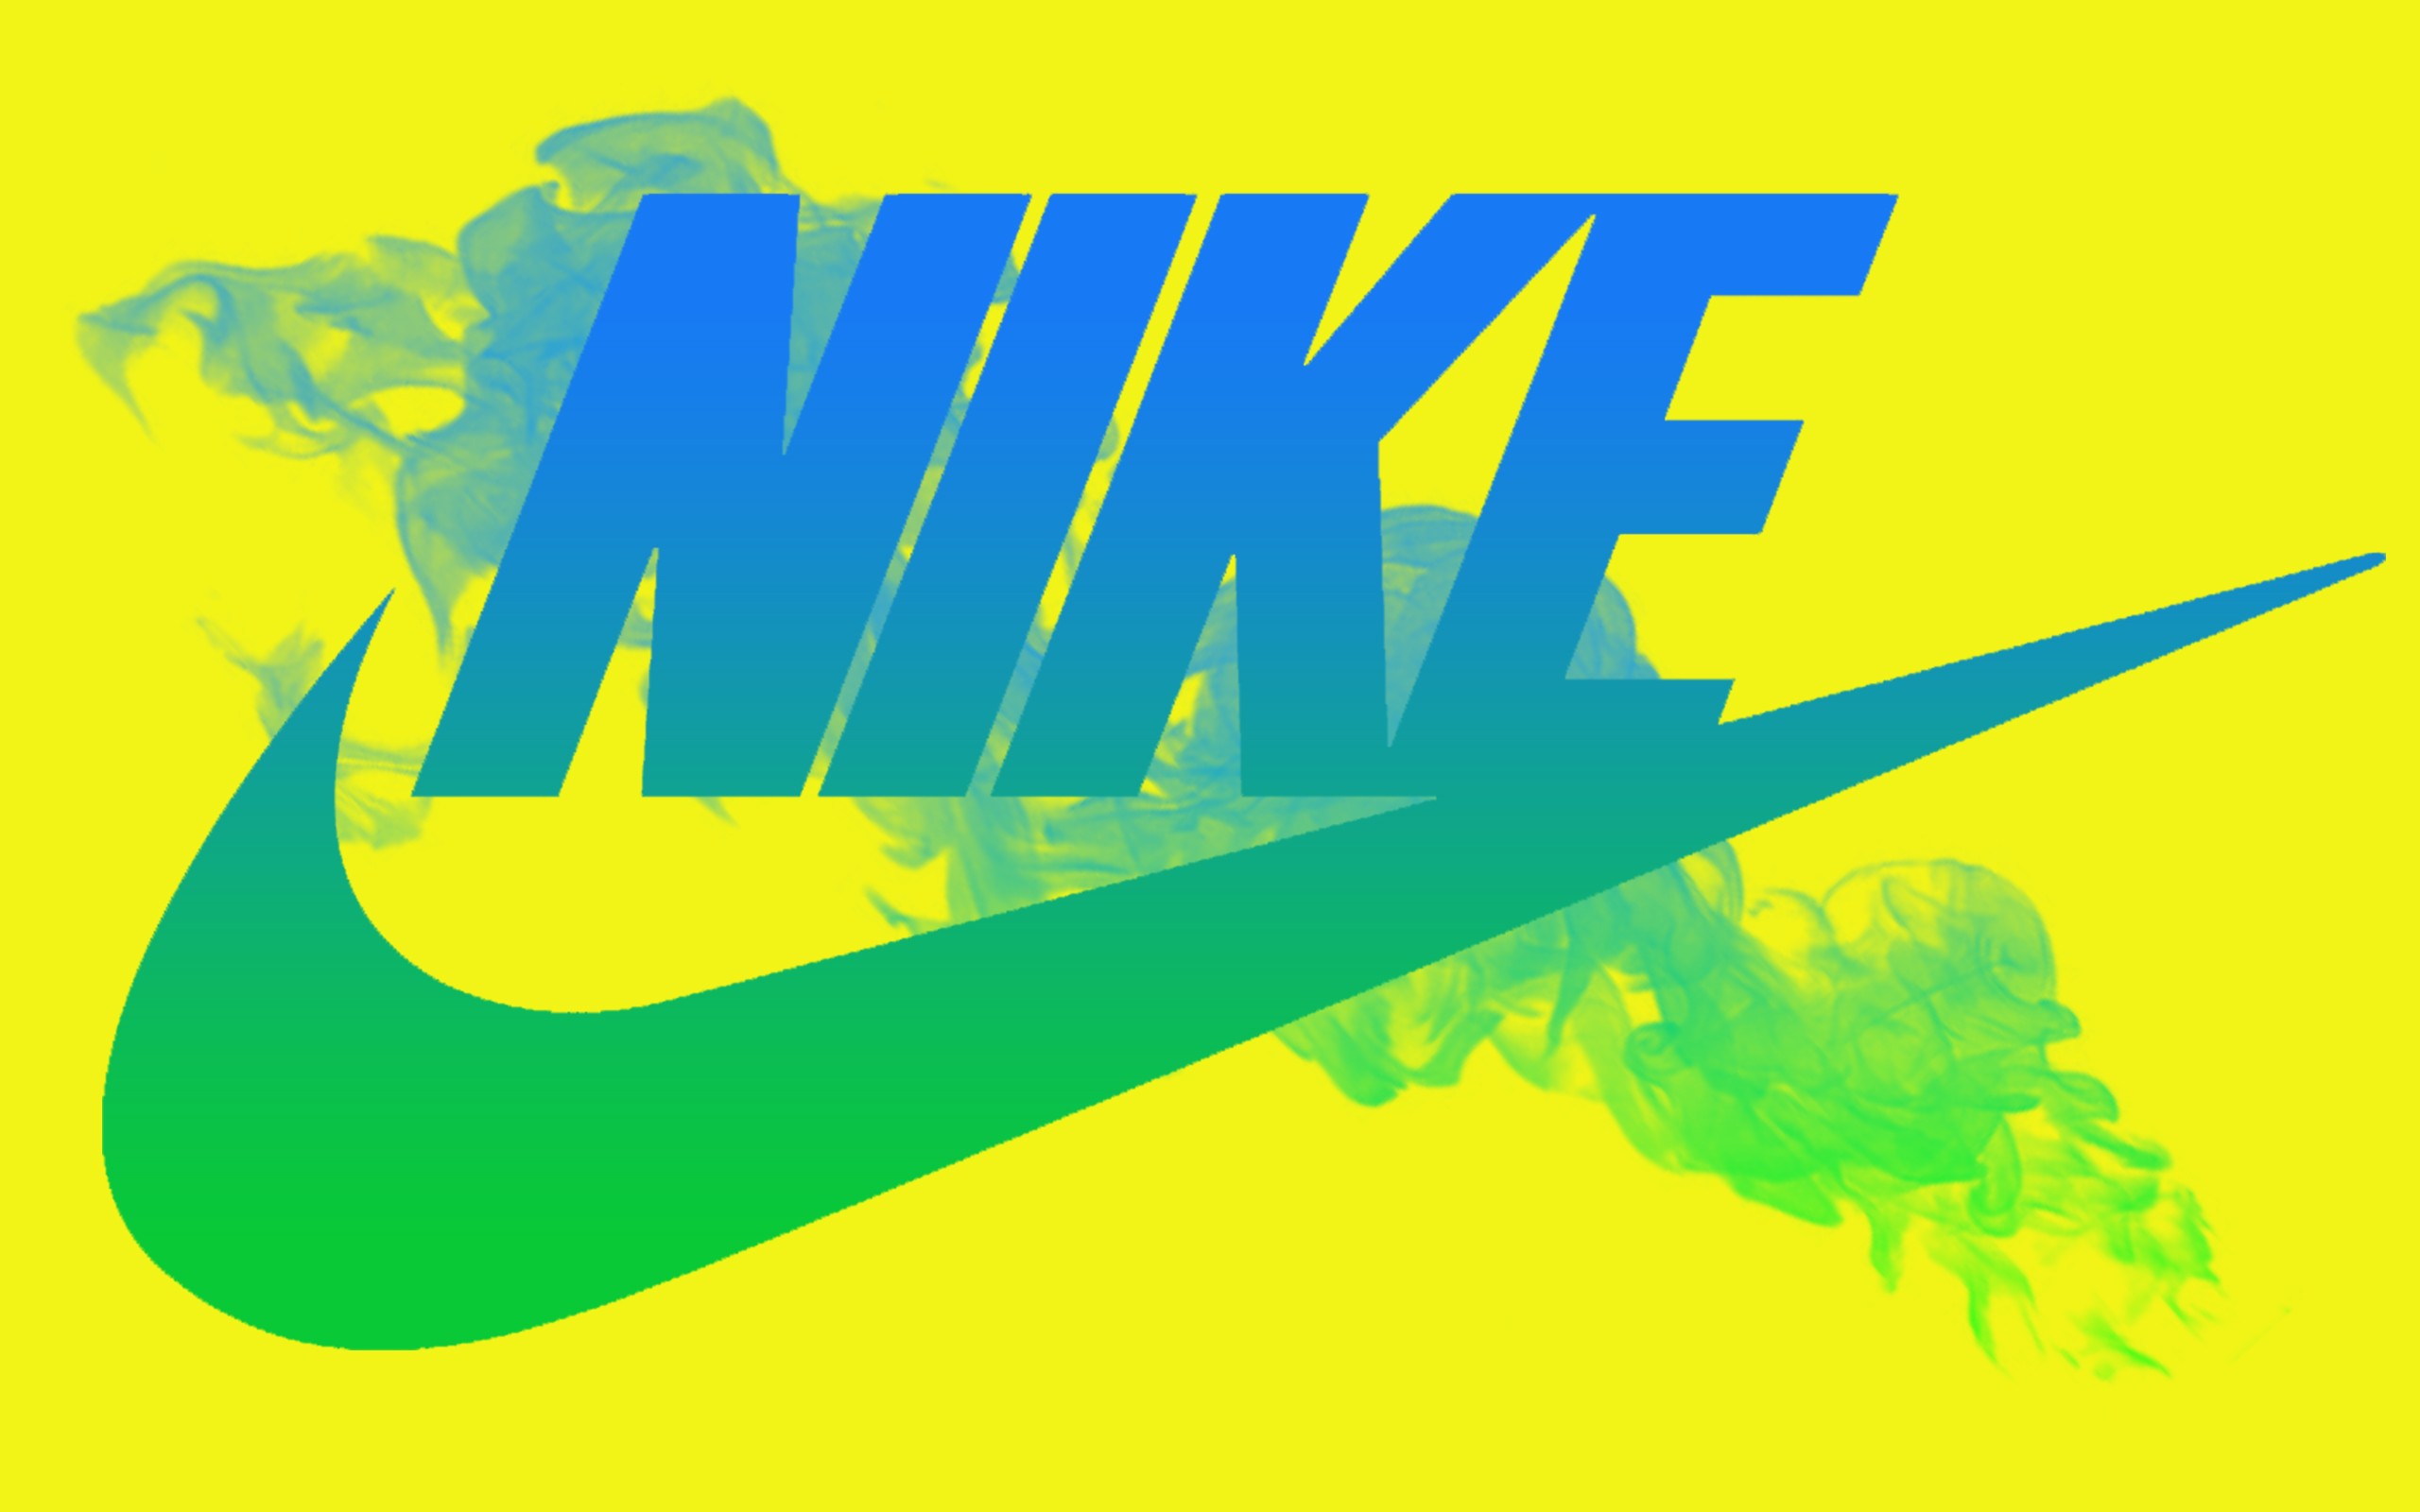 General 2560x1600 logo yellow background Nike yellow blue green brand digital art simple background